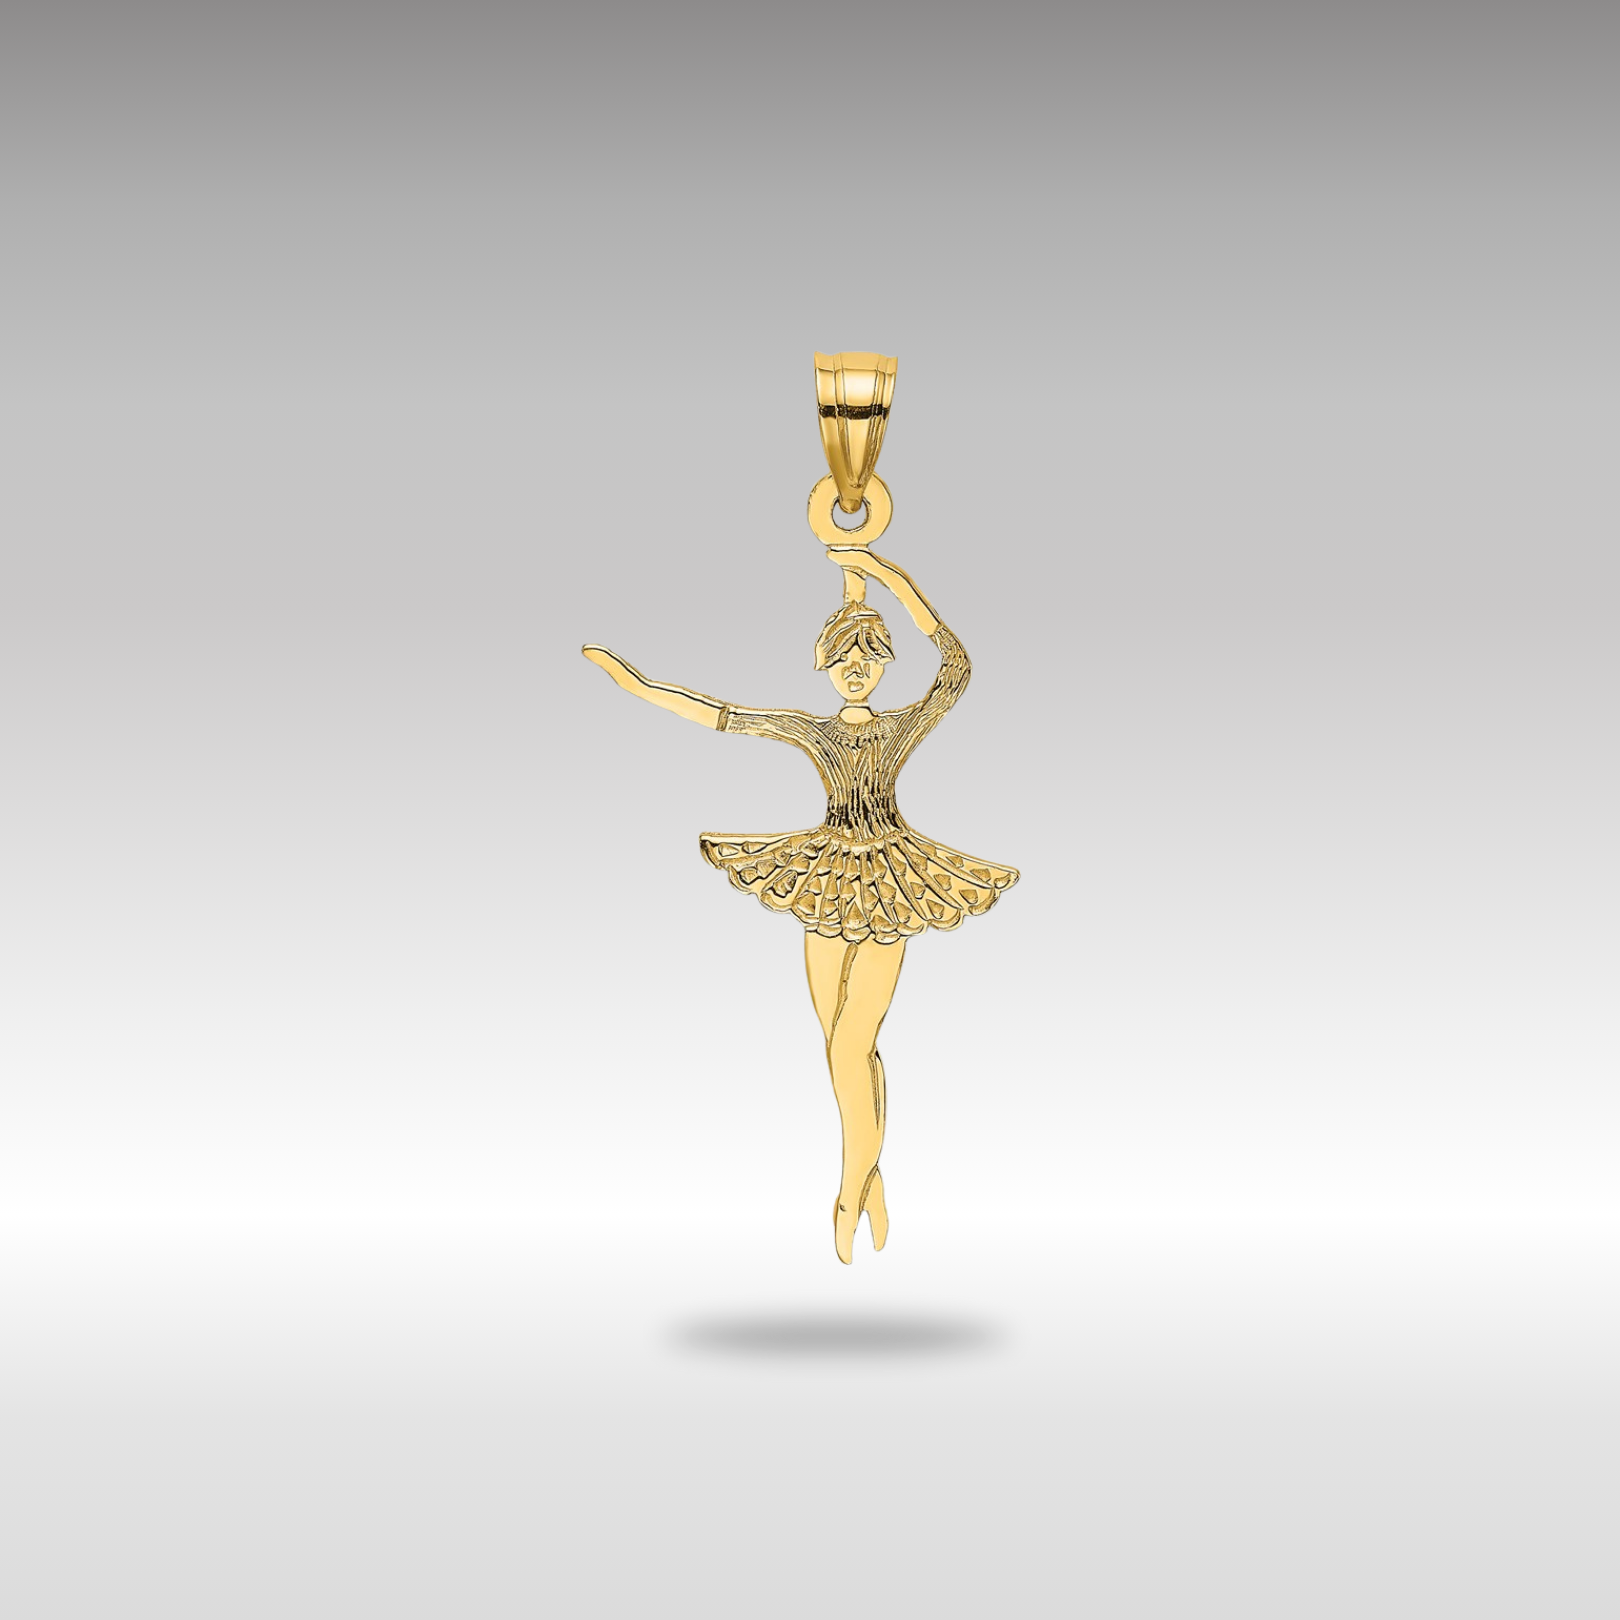 Gold Ballerina Pendant Model-D1253 - Charlie & Co. Jewelry